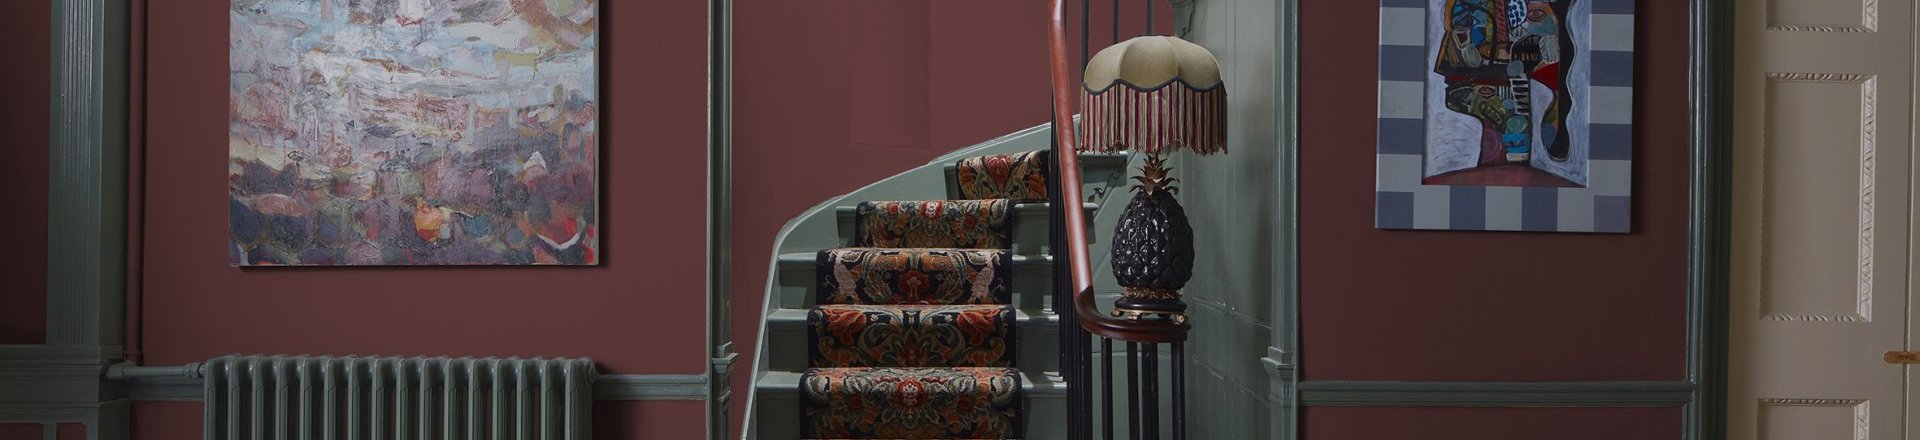 House of Hackney x Axminster Carpets